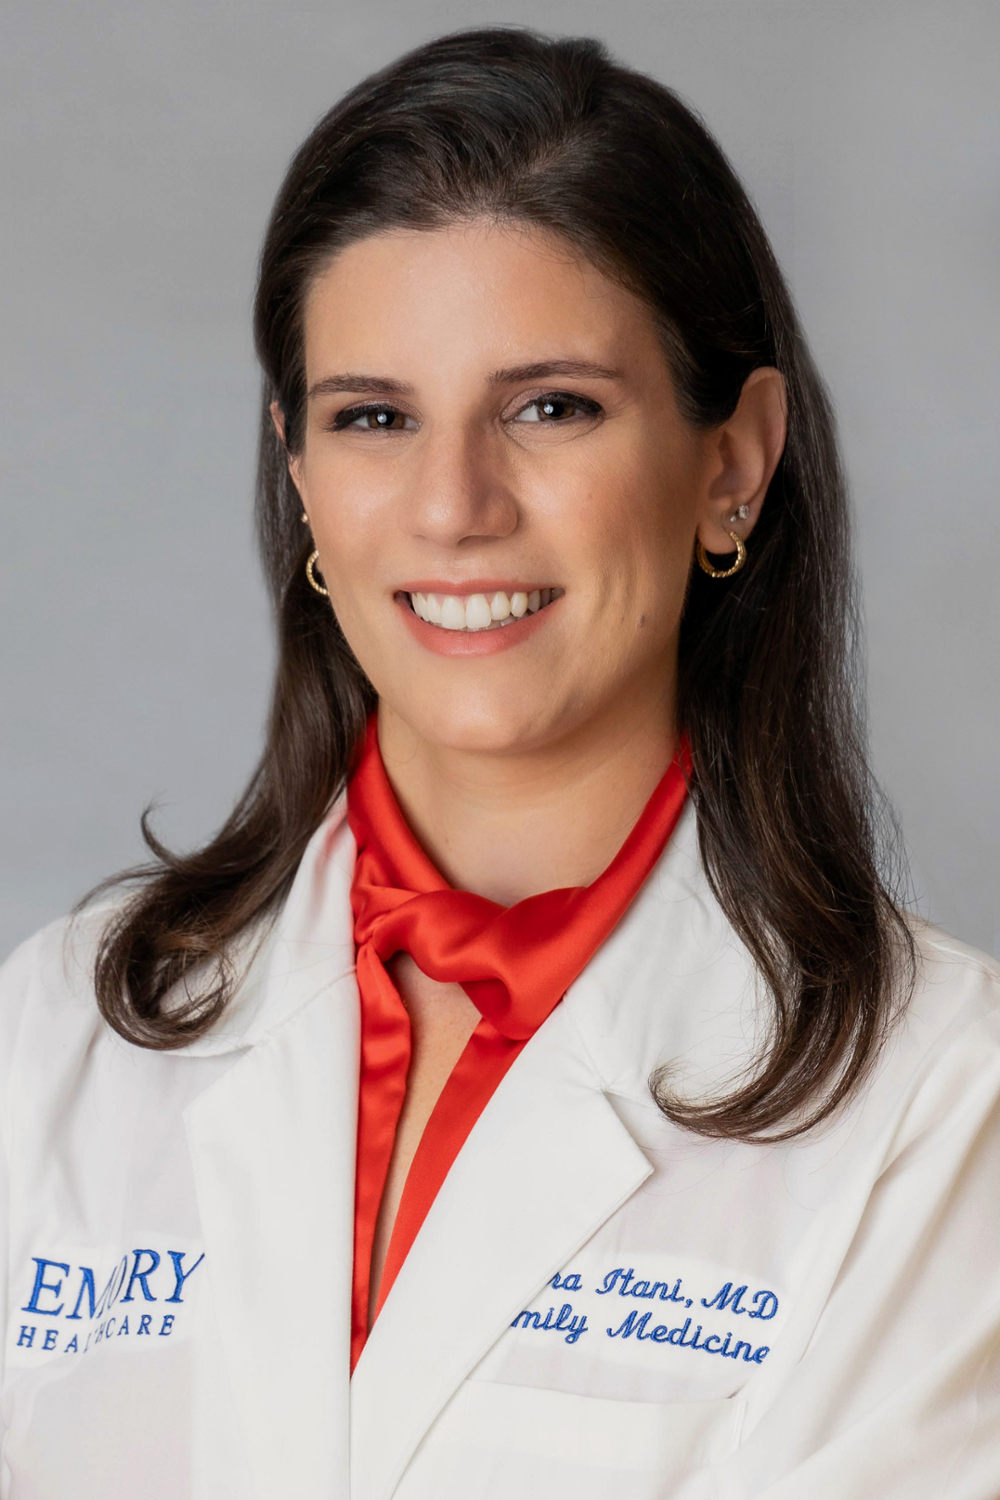 Dr. Mira Itani